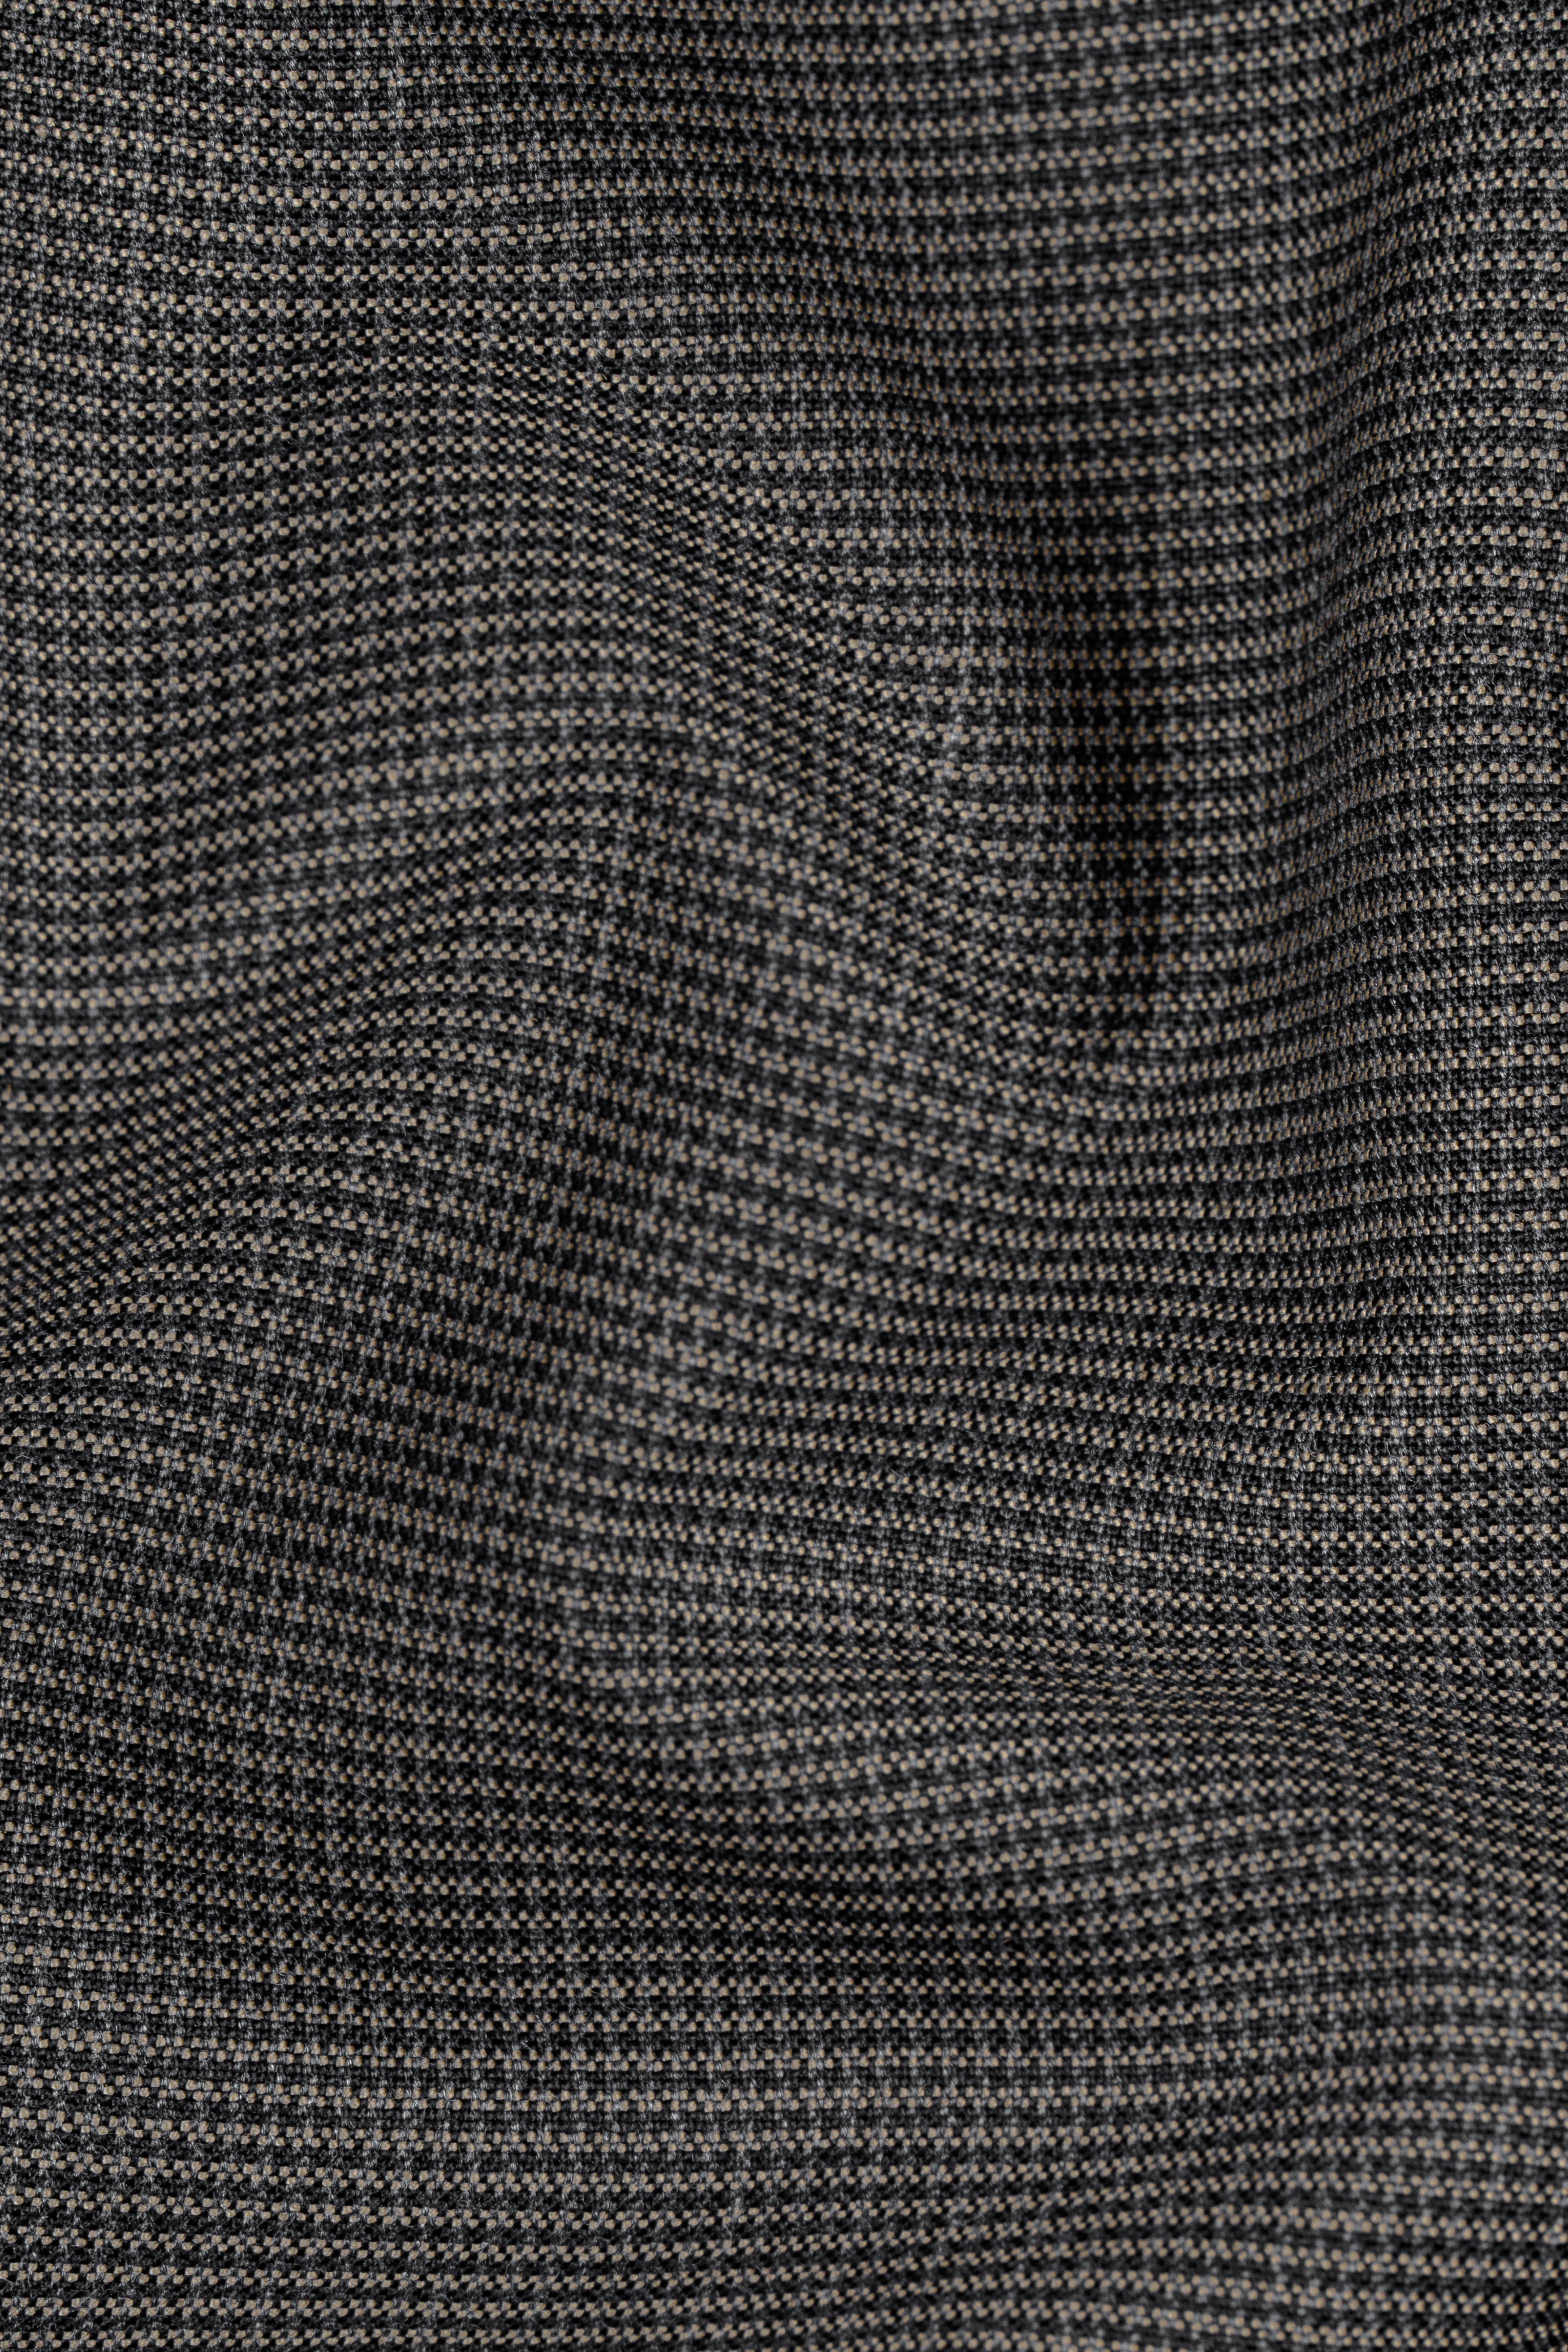 Iridium Gray Textured Wool Rice Tuxedo Blazer